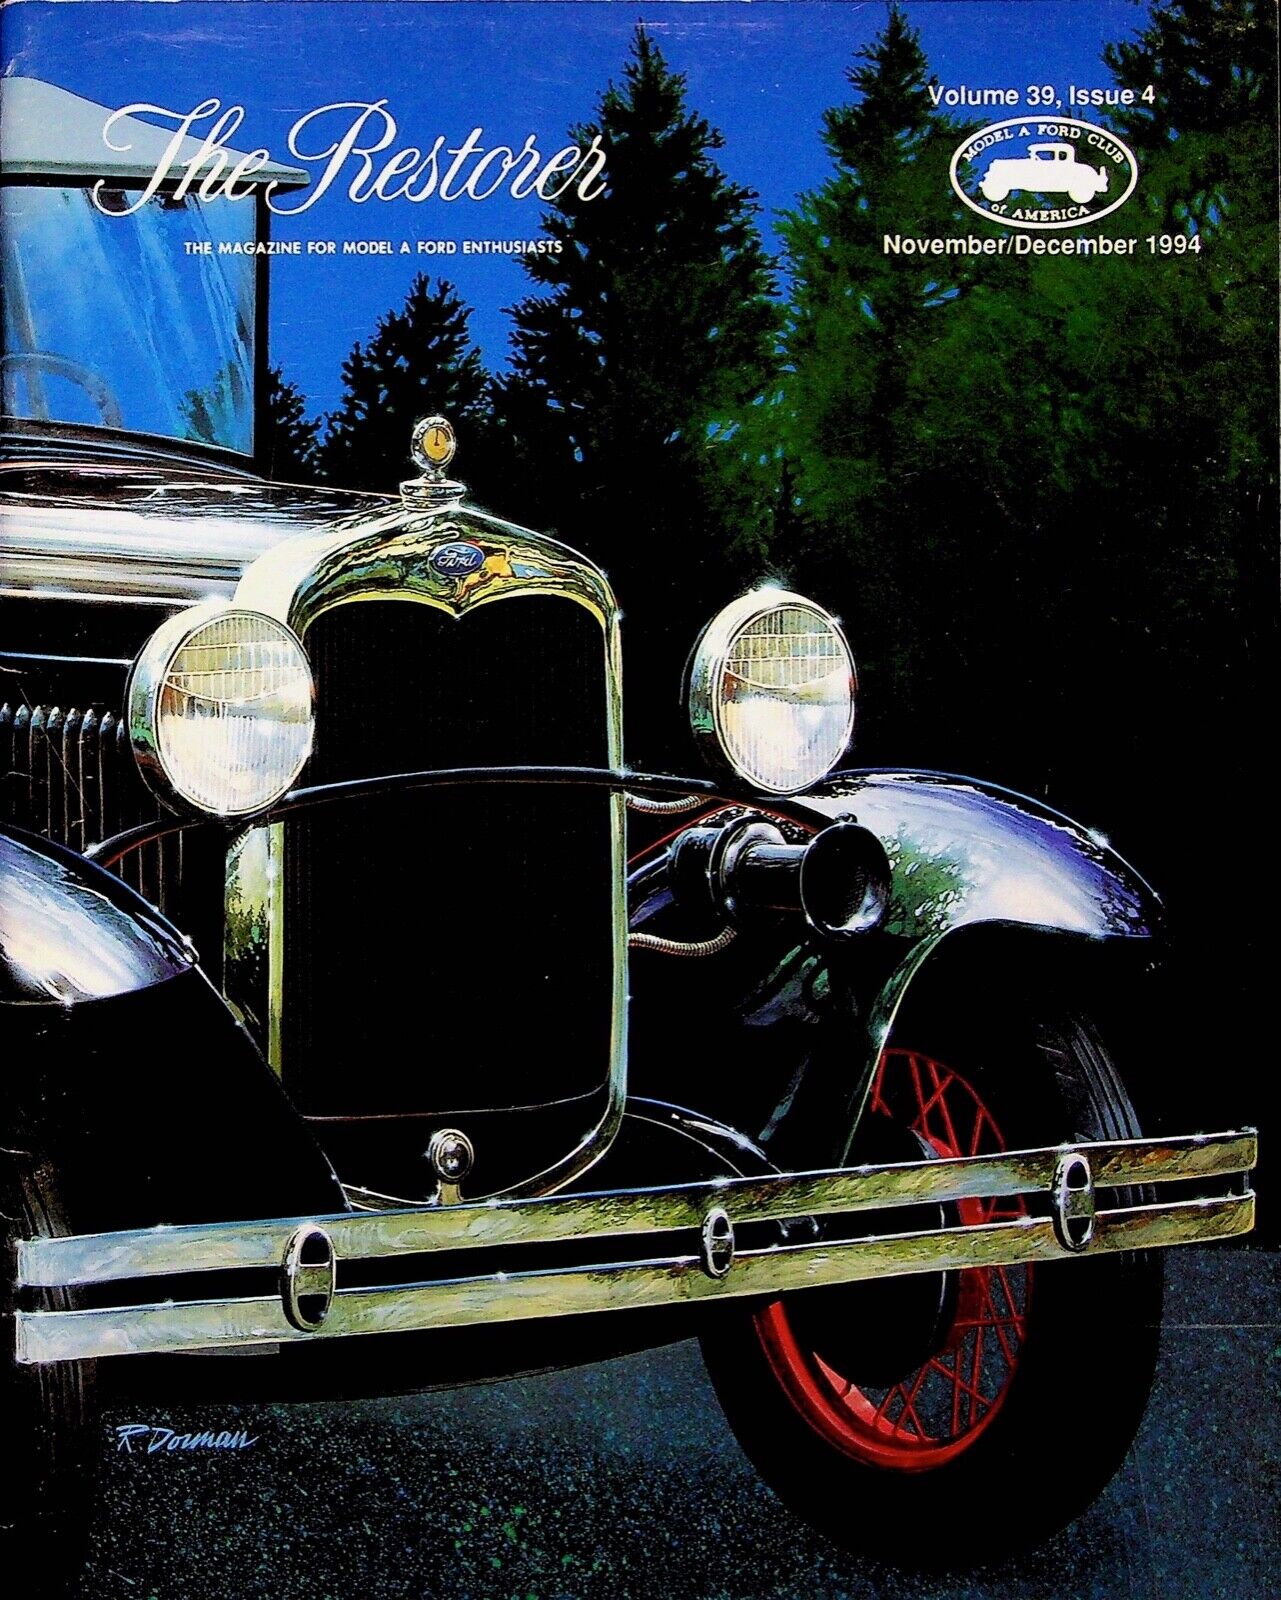 1929 ST PAUL HYDRAULIC  - THE RESTORE CAR MAGAZINE, VOL. 39, NO.4 1994, NOV/DEC